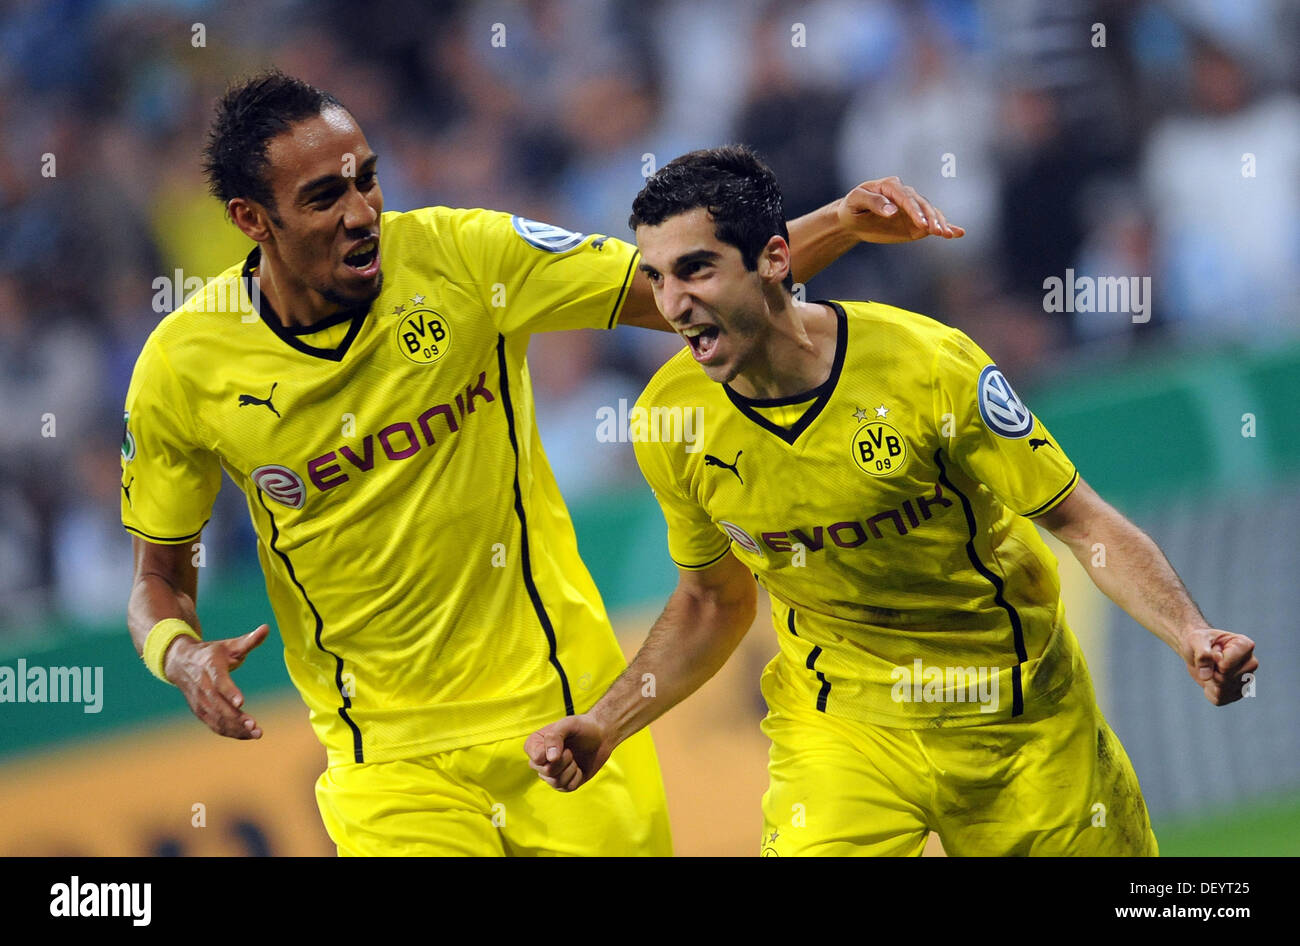 1860 Munich vs Borussia Dortmund live stream: Watch today's DFB Pokal match  online